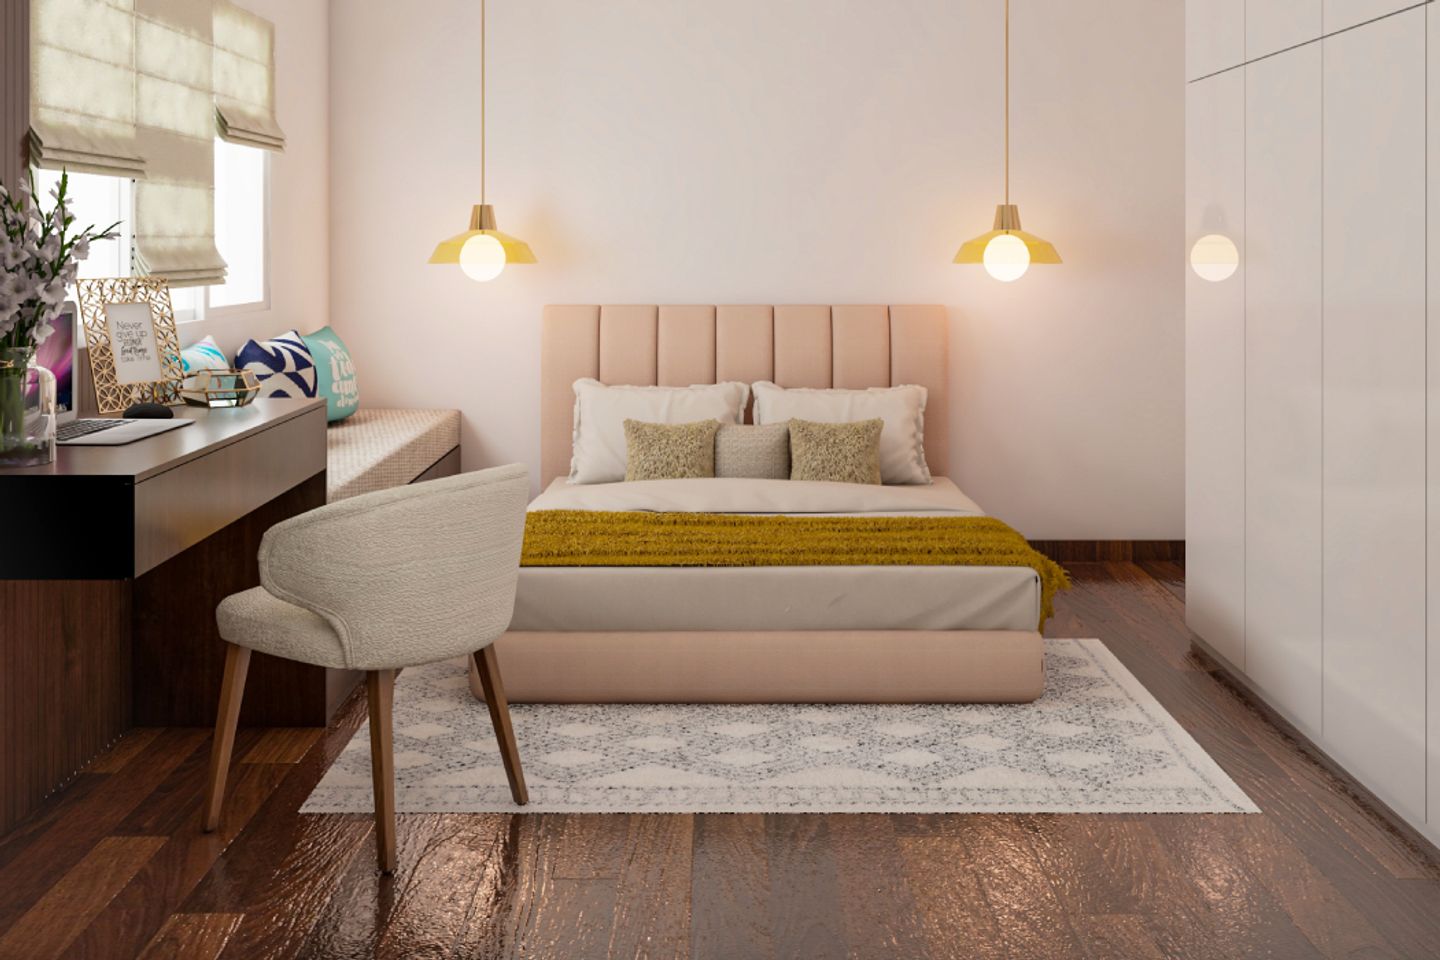 Wood Flooring Design For Bedrooms - Livspace